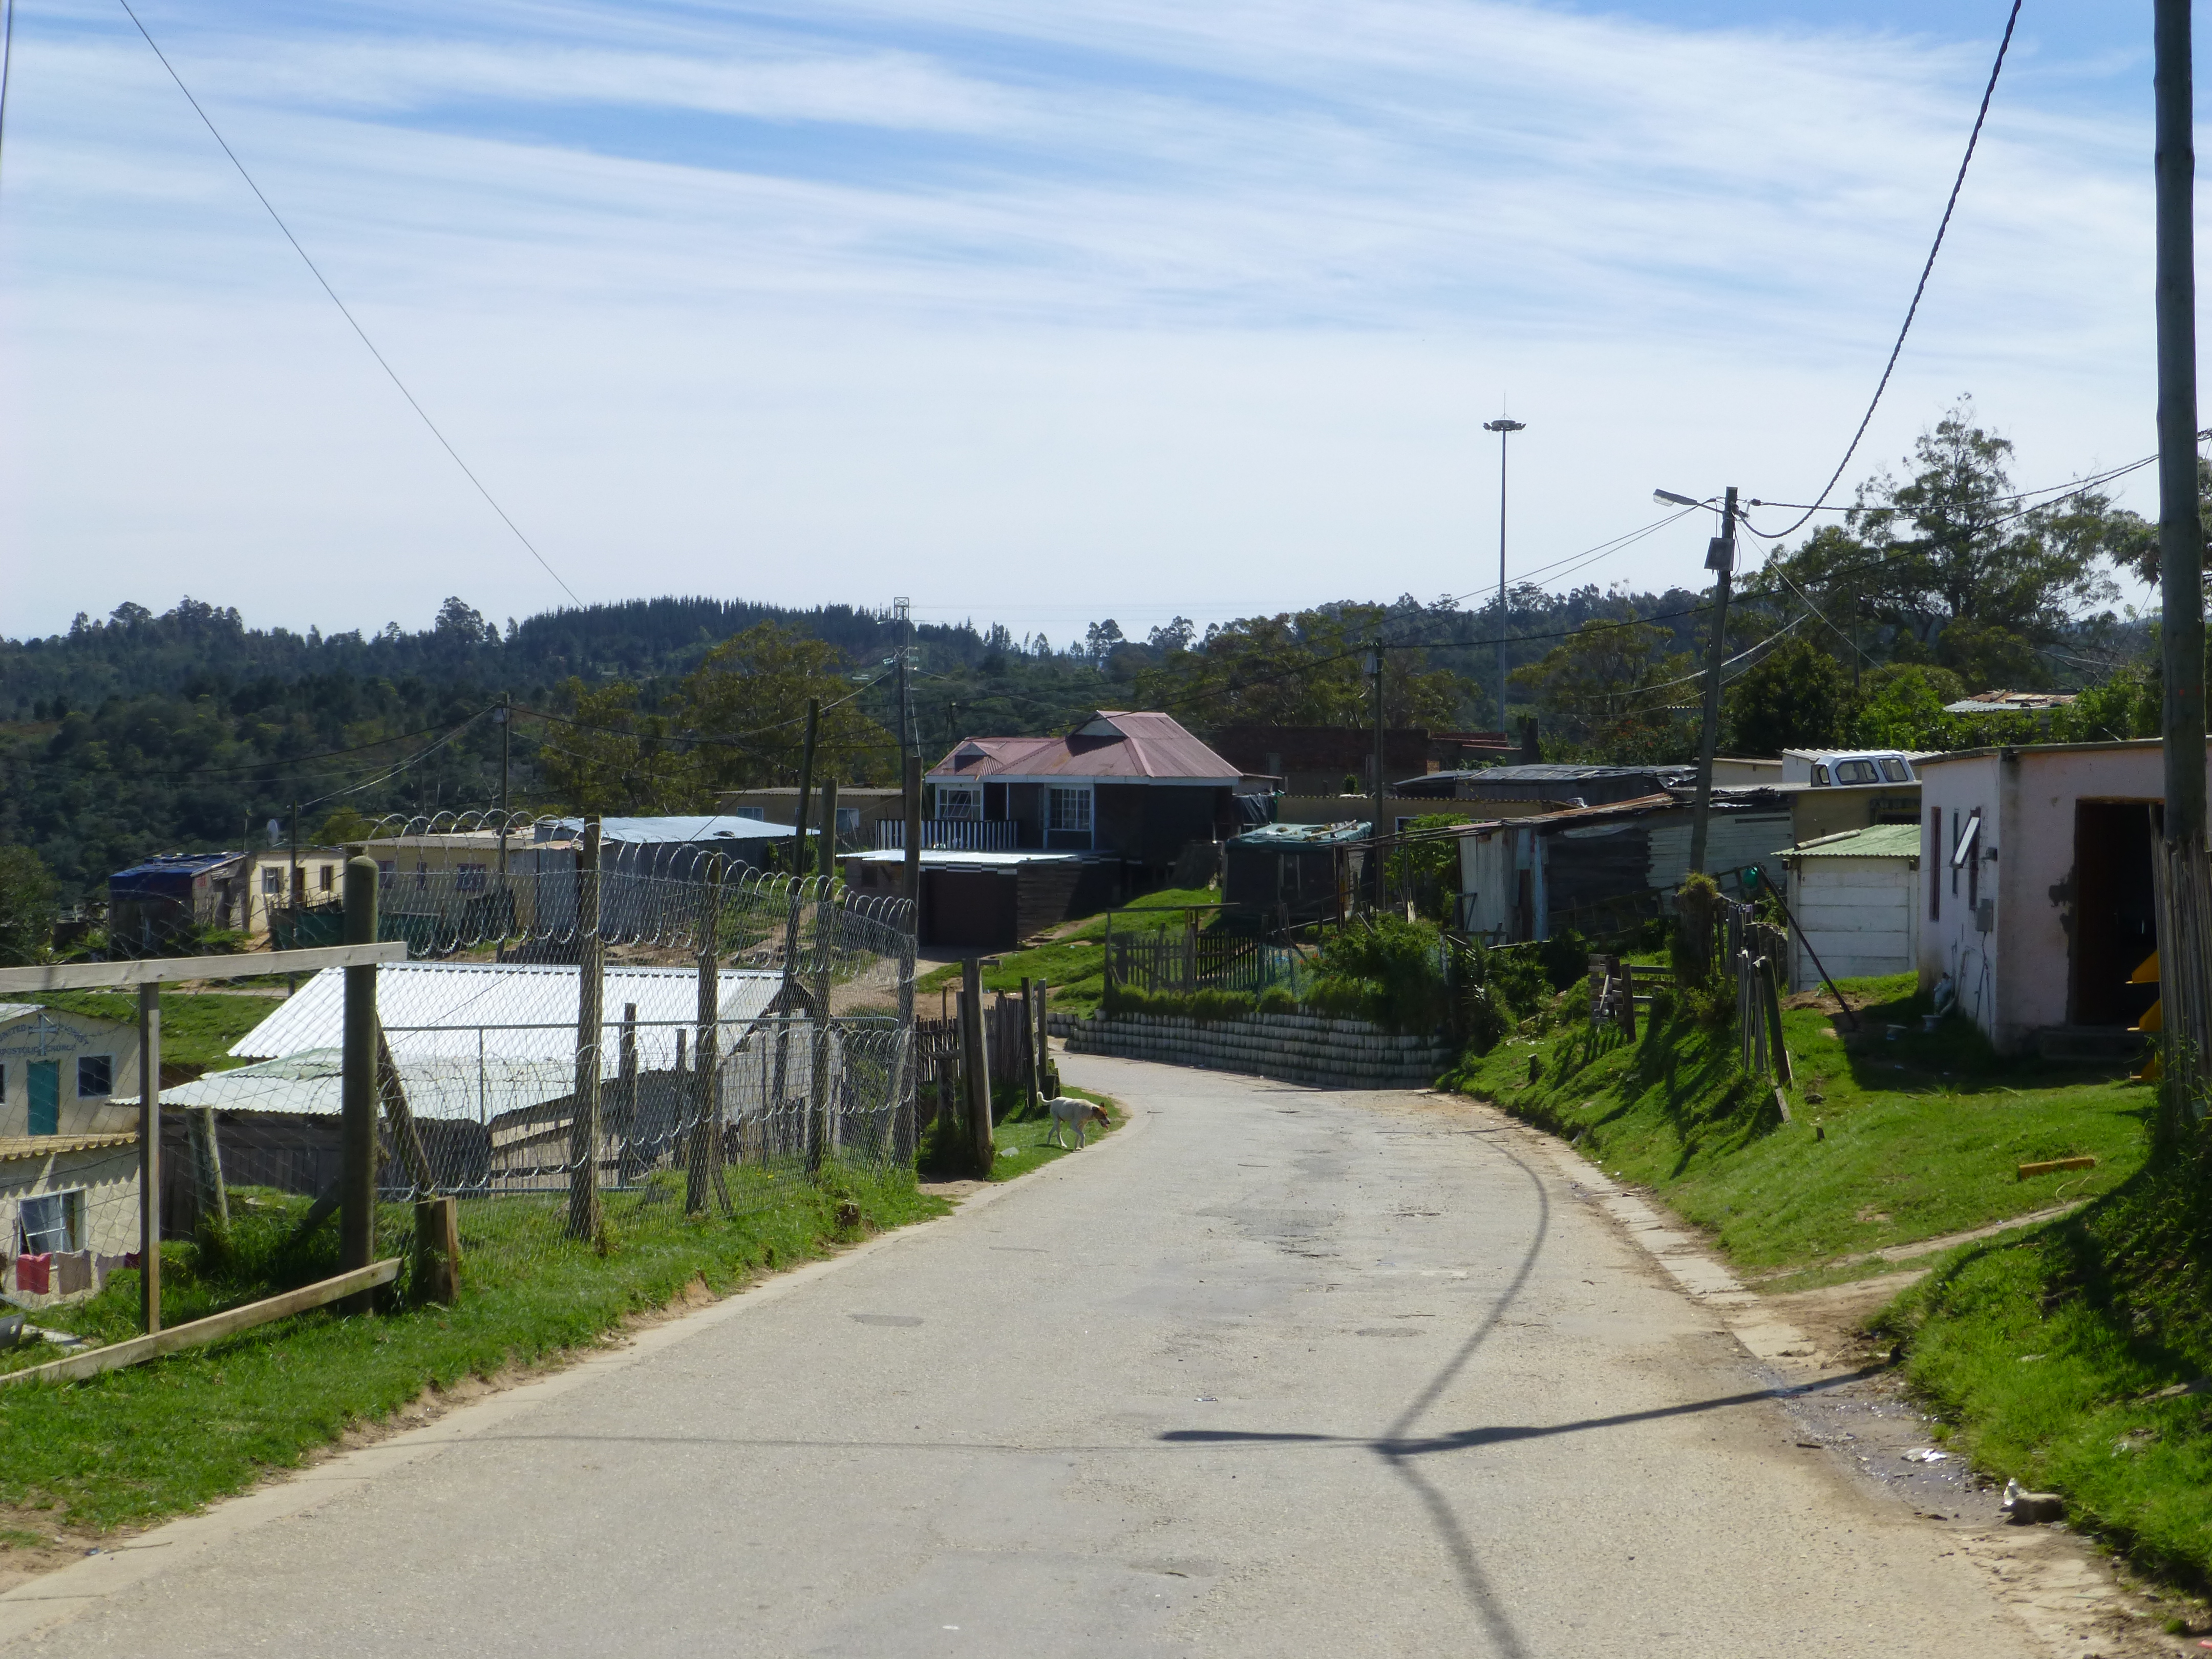 Township Toer in Knysna Zuid Afrika